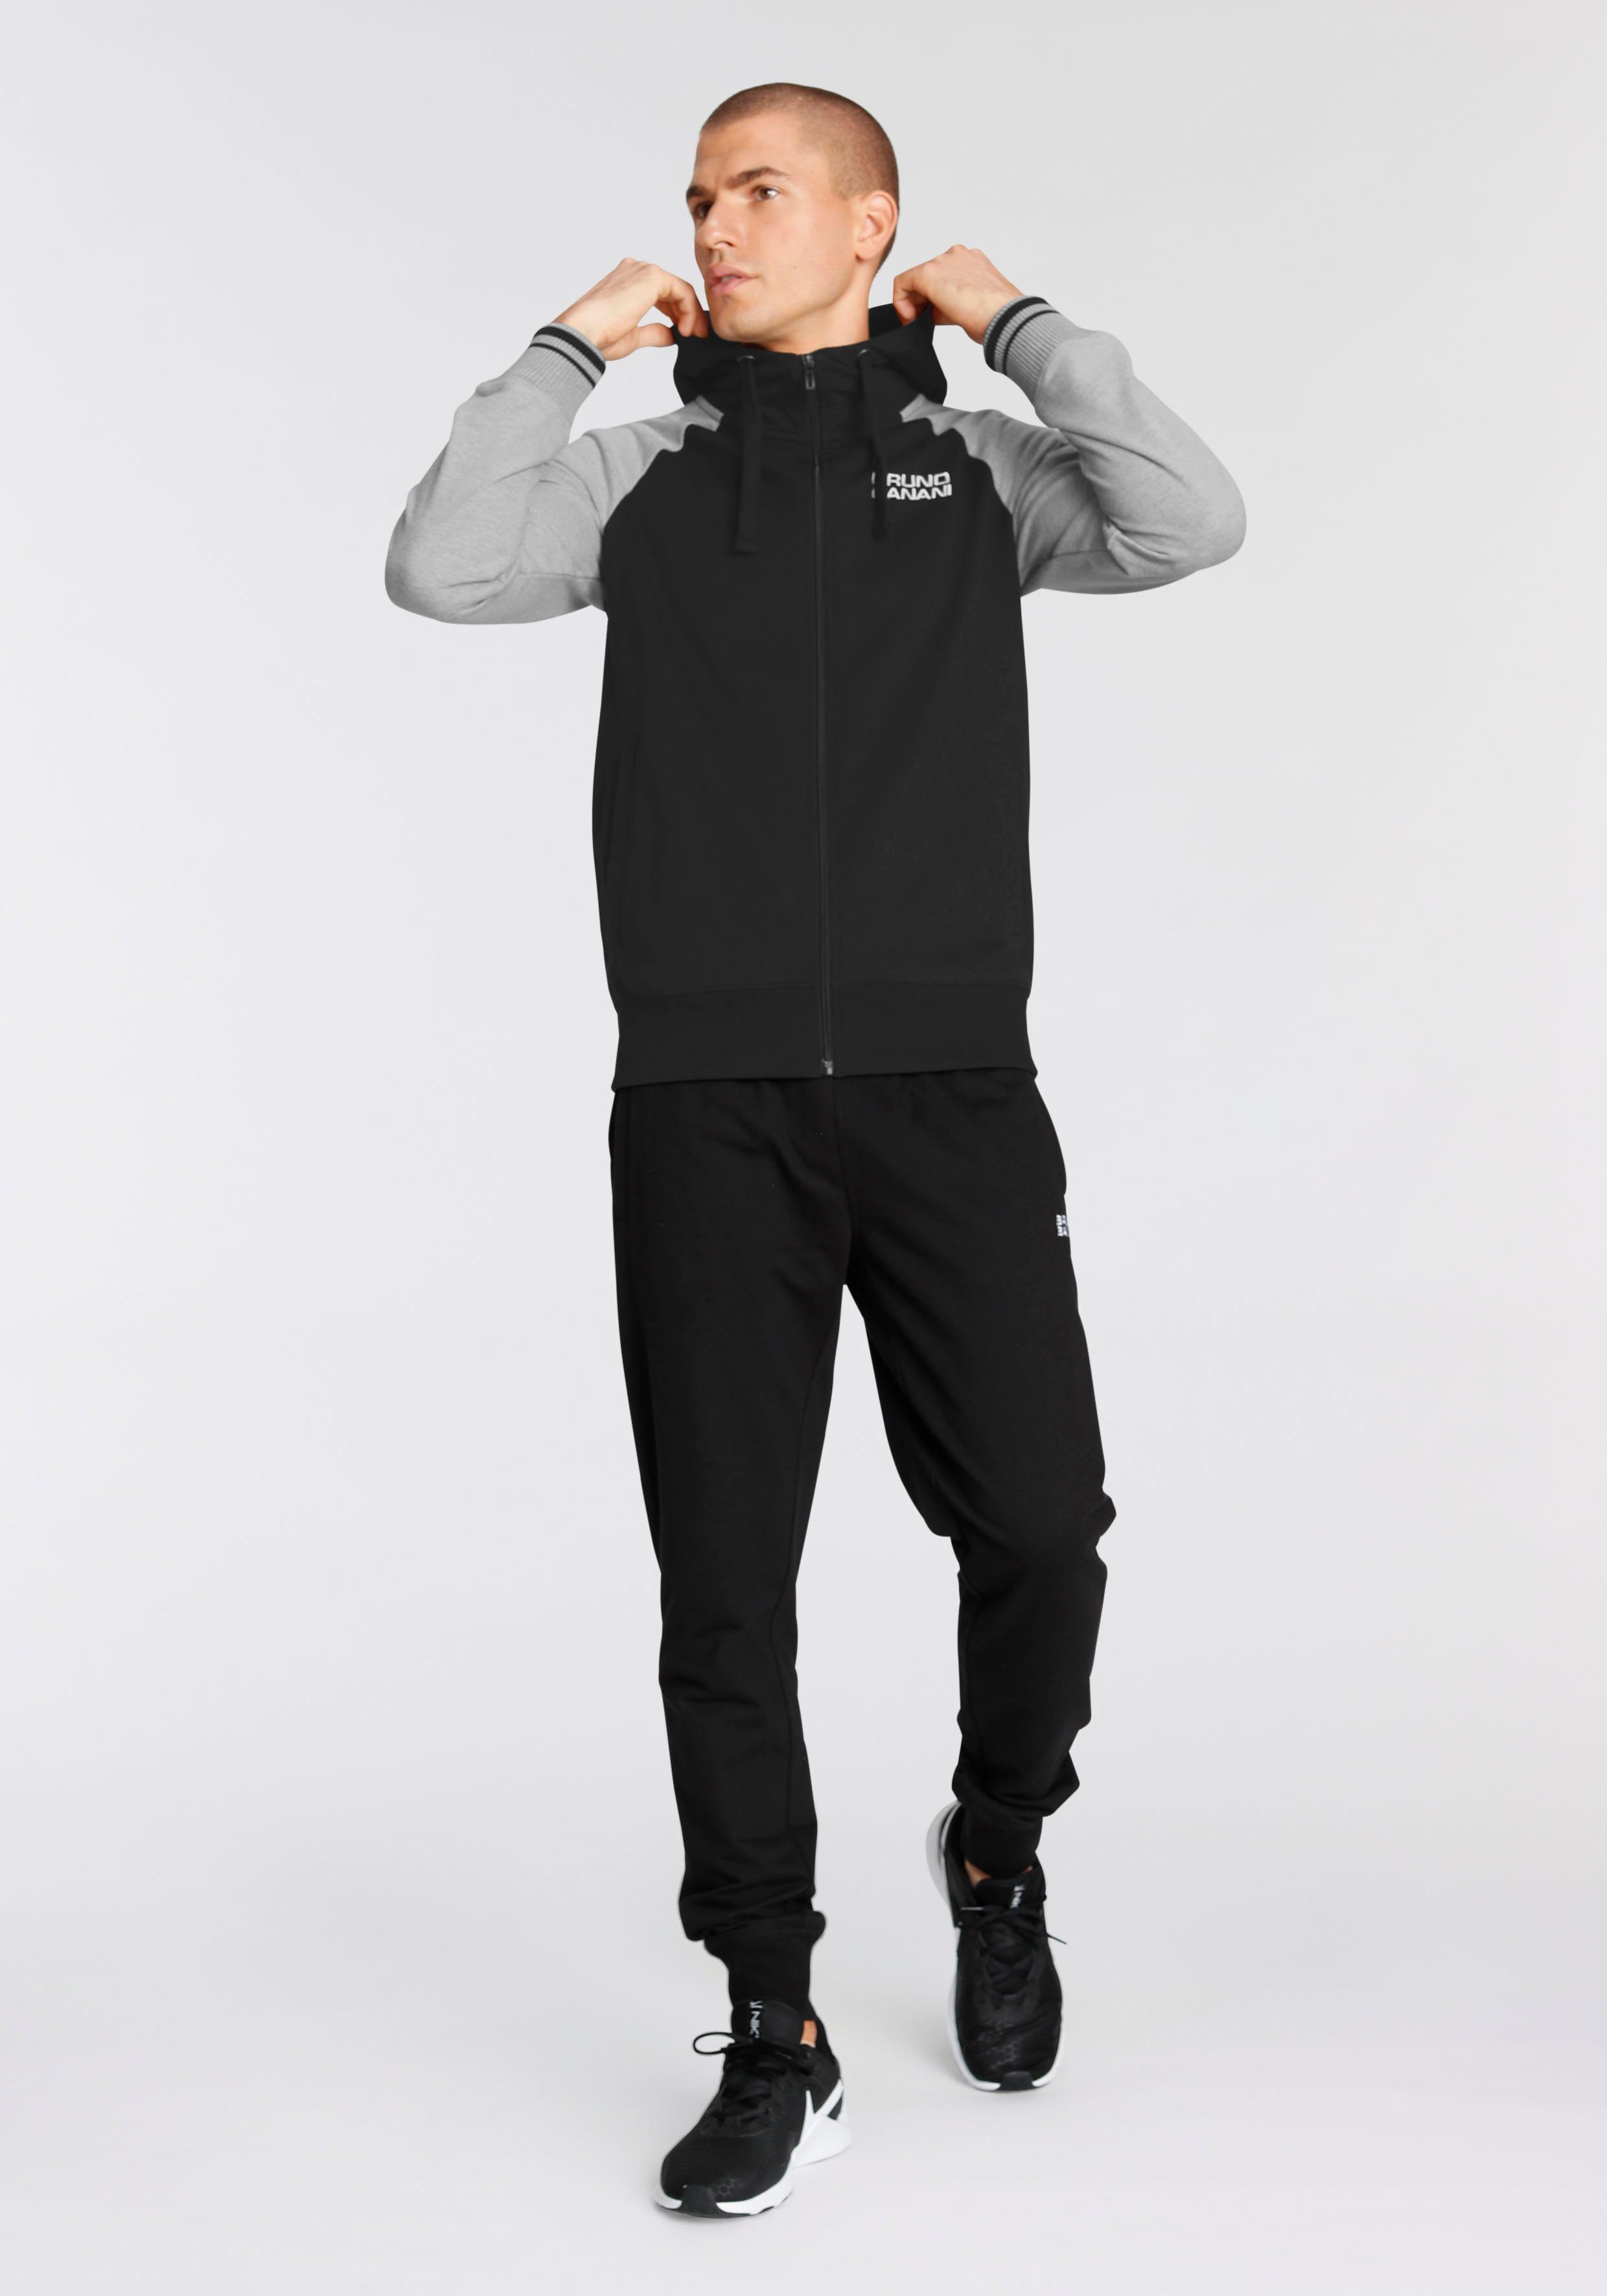 Jogginganzug Comfort Fit, Banani schwarz-grau mit Logo Stickerei Bruno